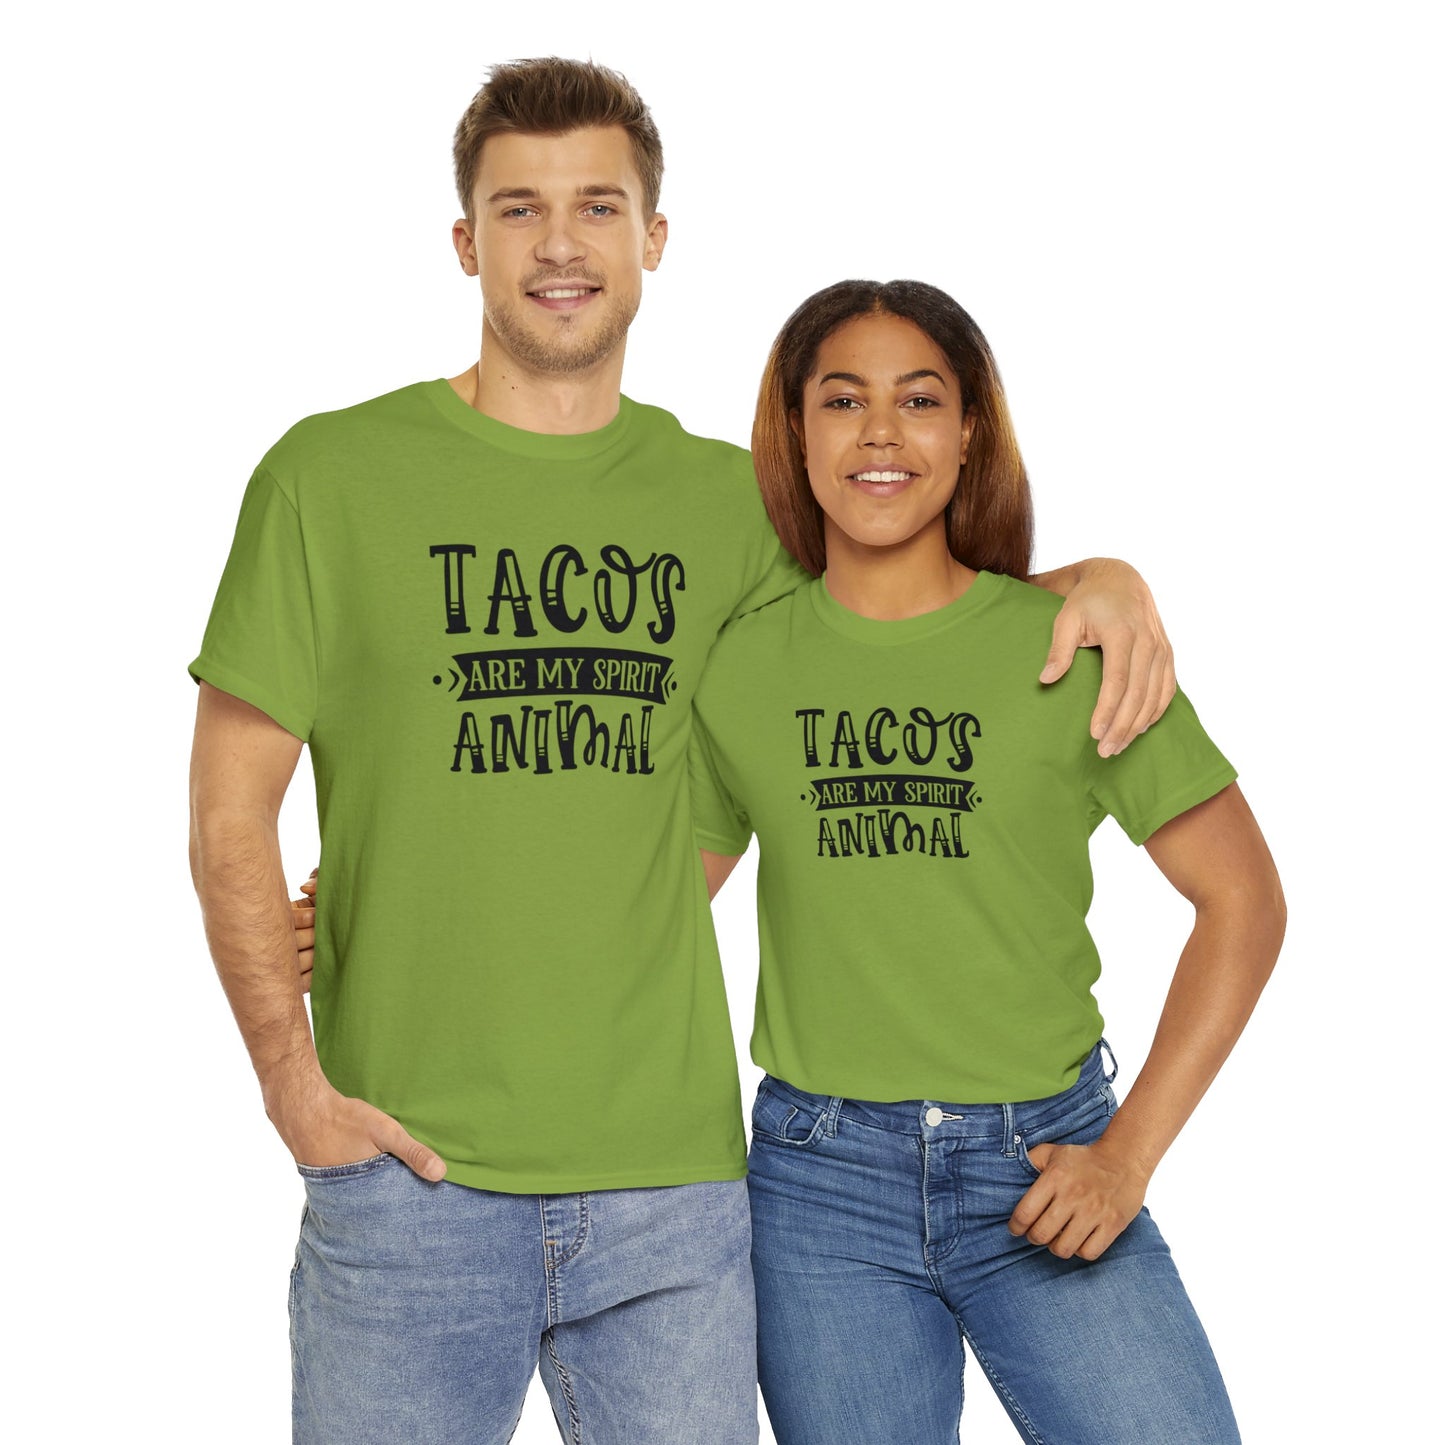 Funny Taco T-Shirt For Spirit Animal T Shirt For Taco Lovers TShirt Cinco De Mayo Gift